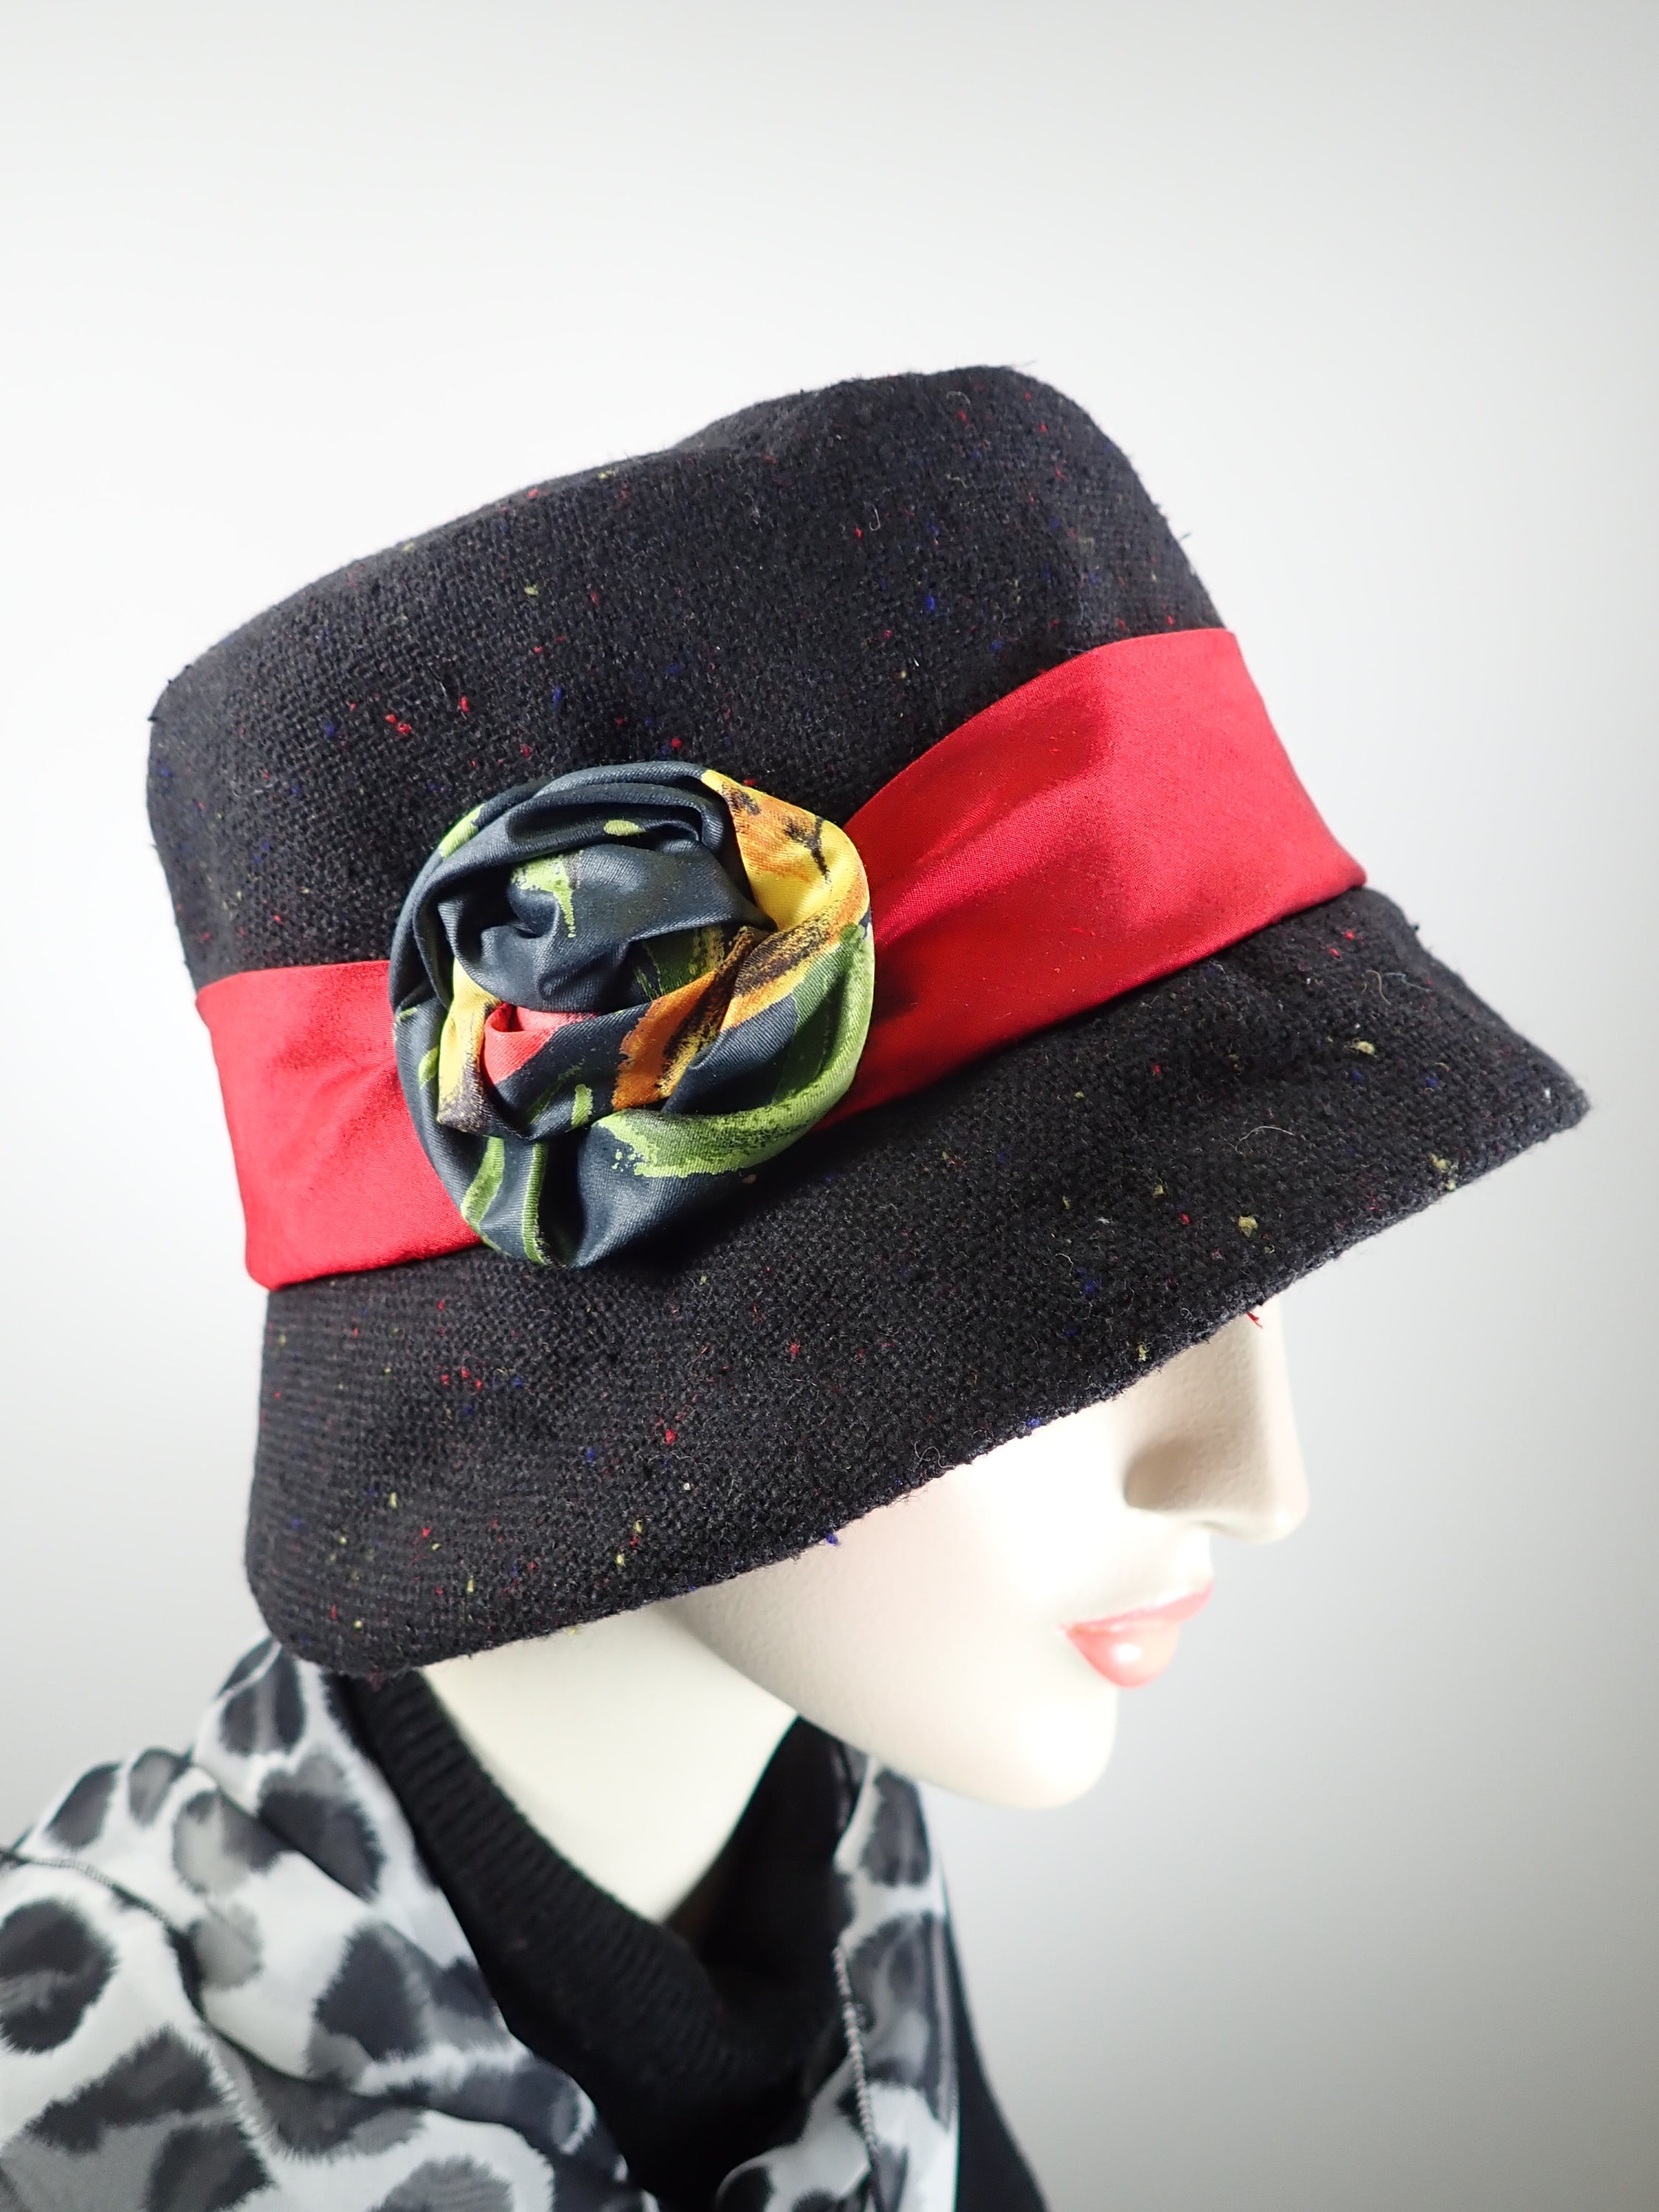 Women's Black and red winter cloche hat. Flapper Small brim cloche. Great Gatsby hat. Stylish Downton Abbey Hat.